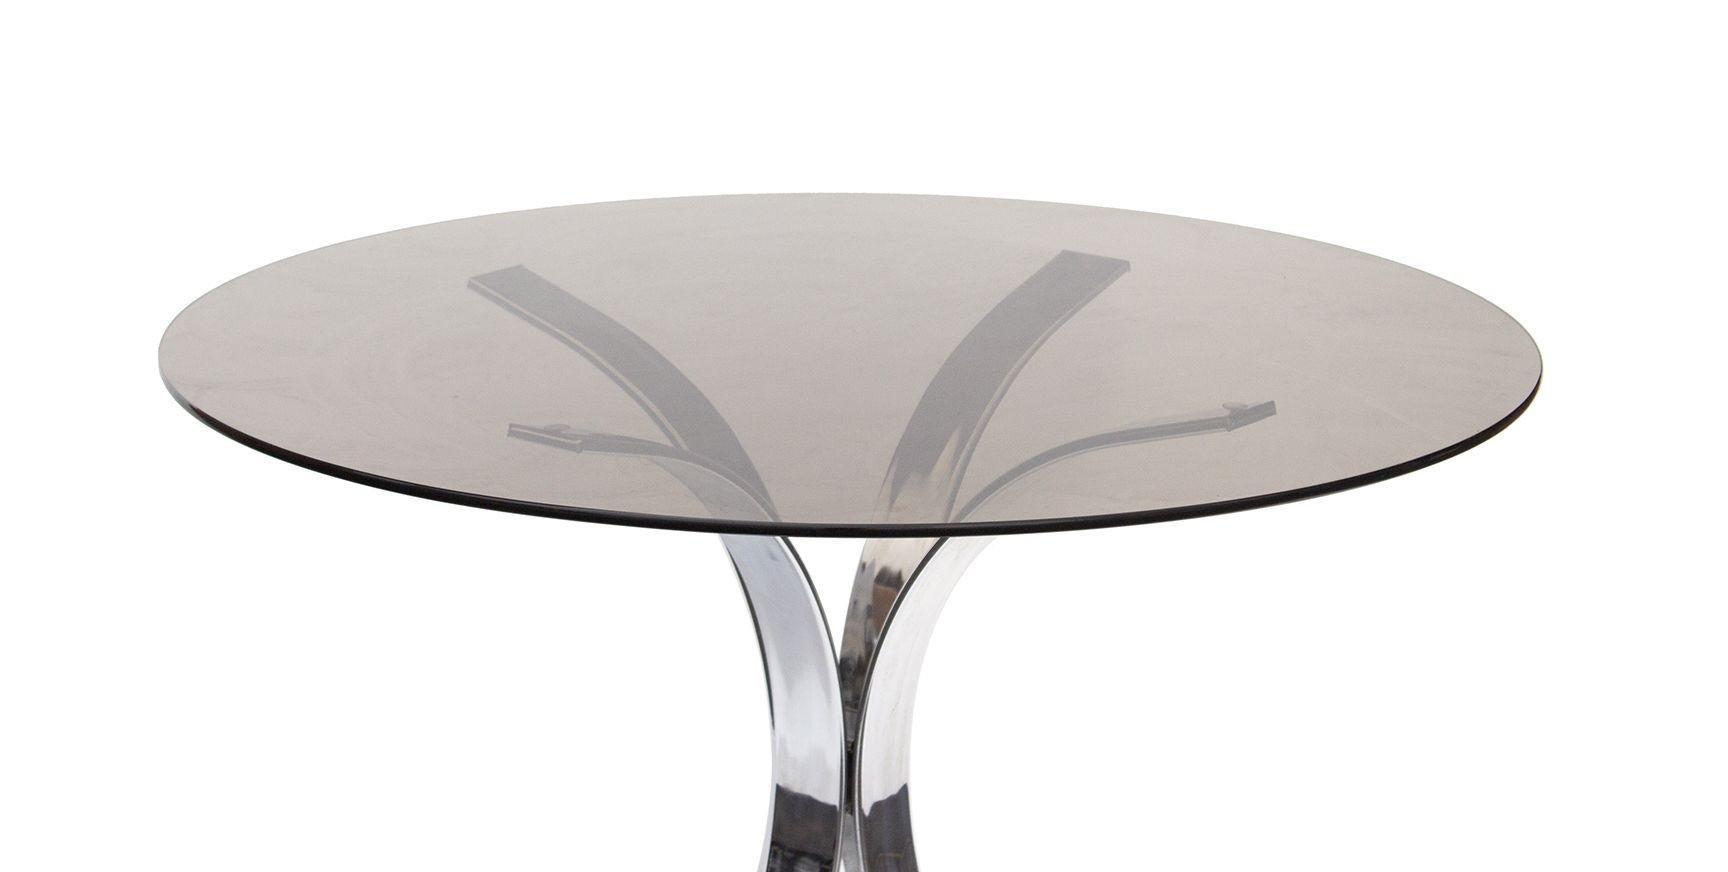 American Chrome Dining Table by Osvaldo Borsani for Stow & Davis For Sale